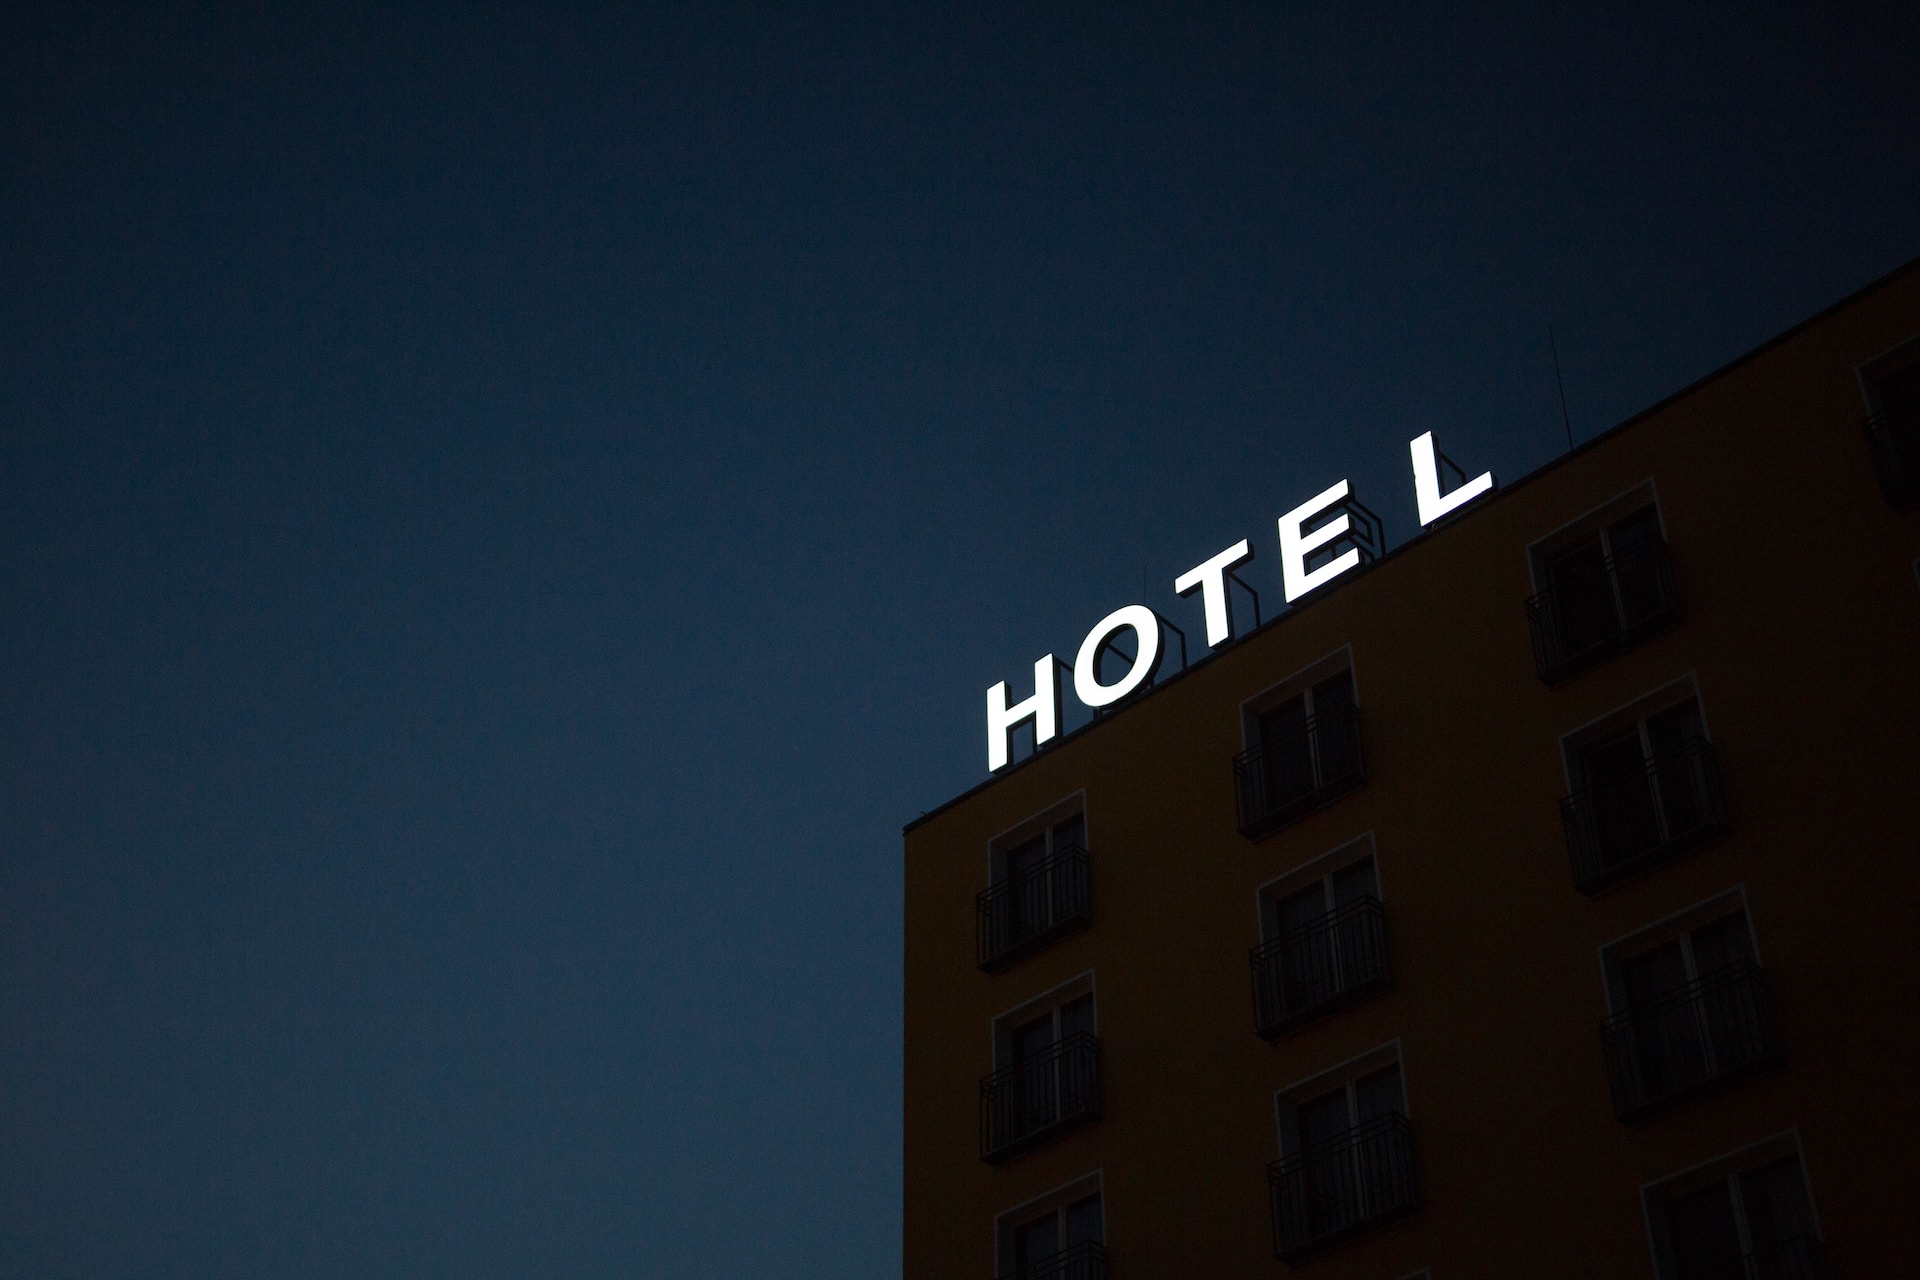 A luminated hotel sign